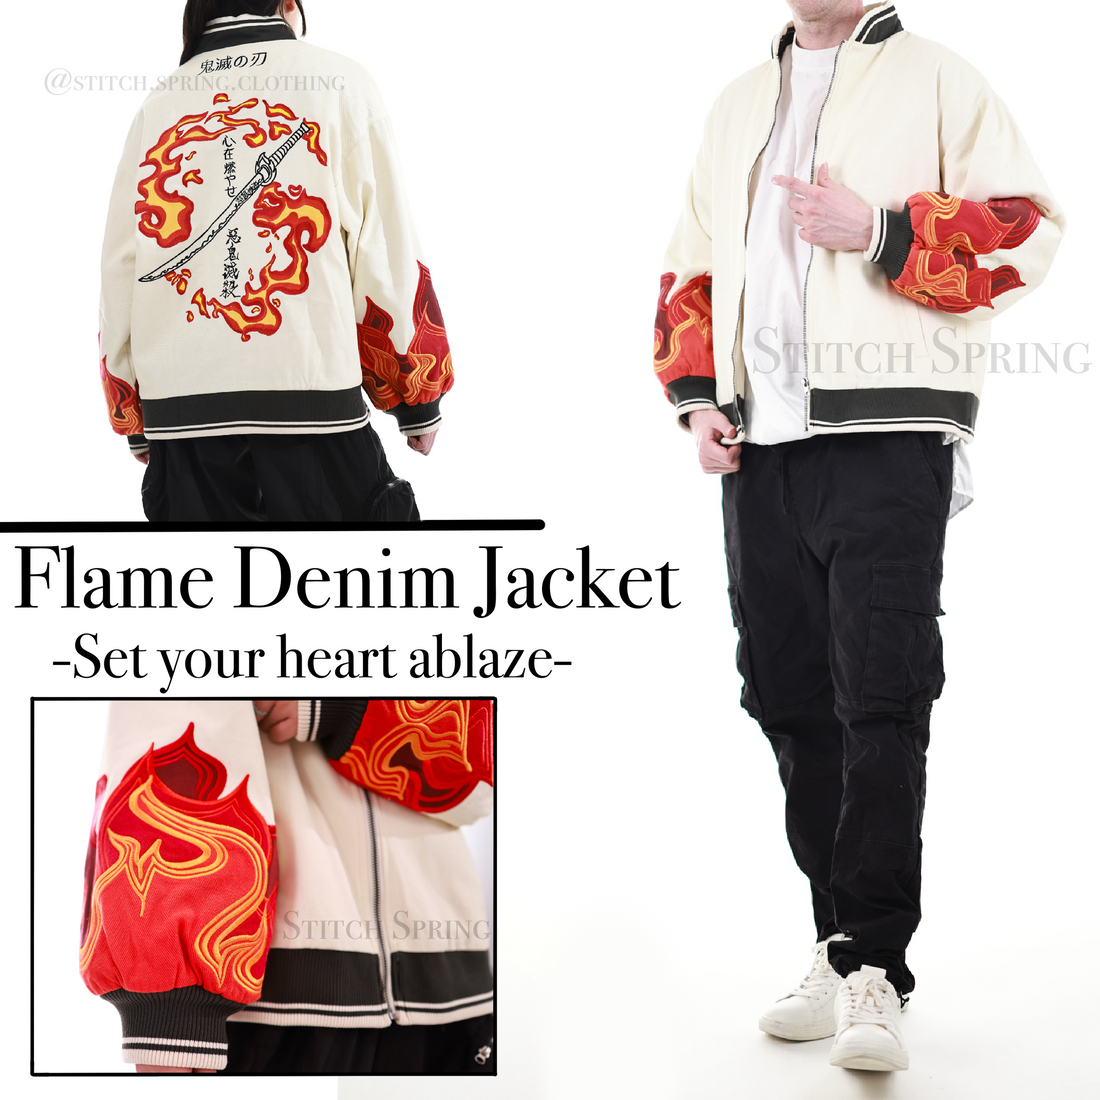 Flame Denim Jacket Preorder